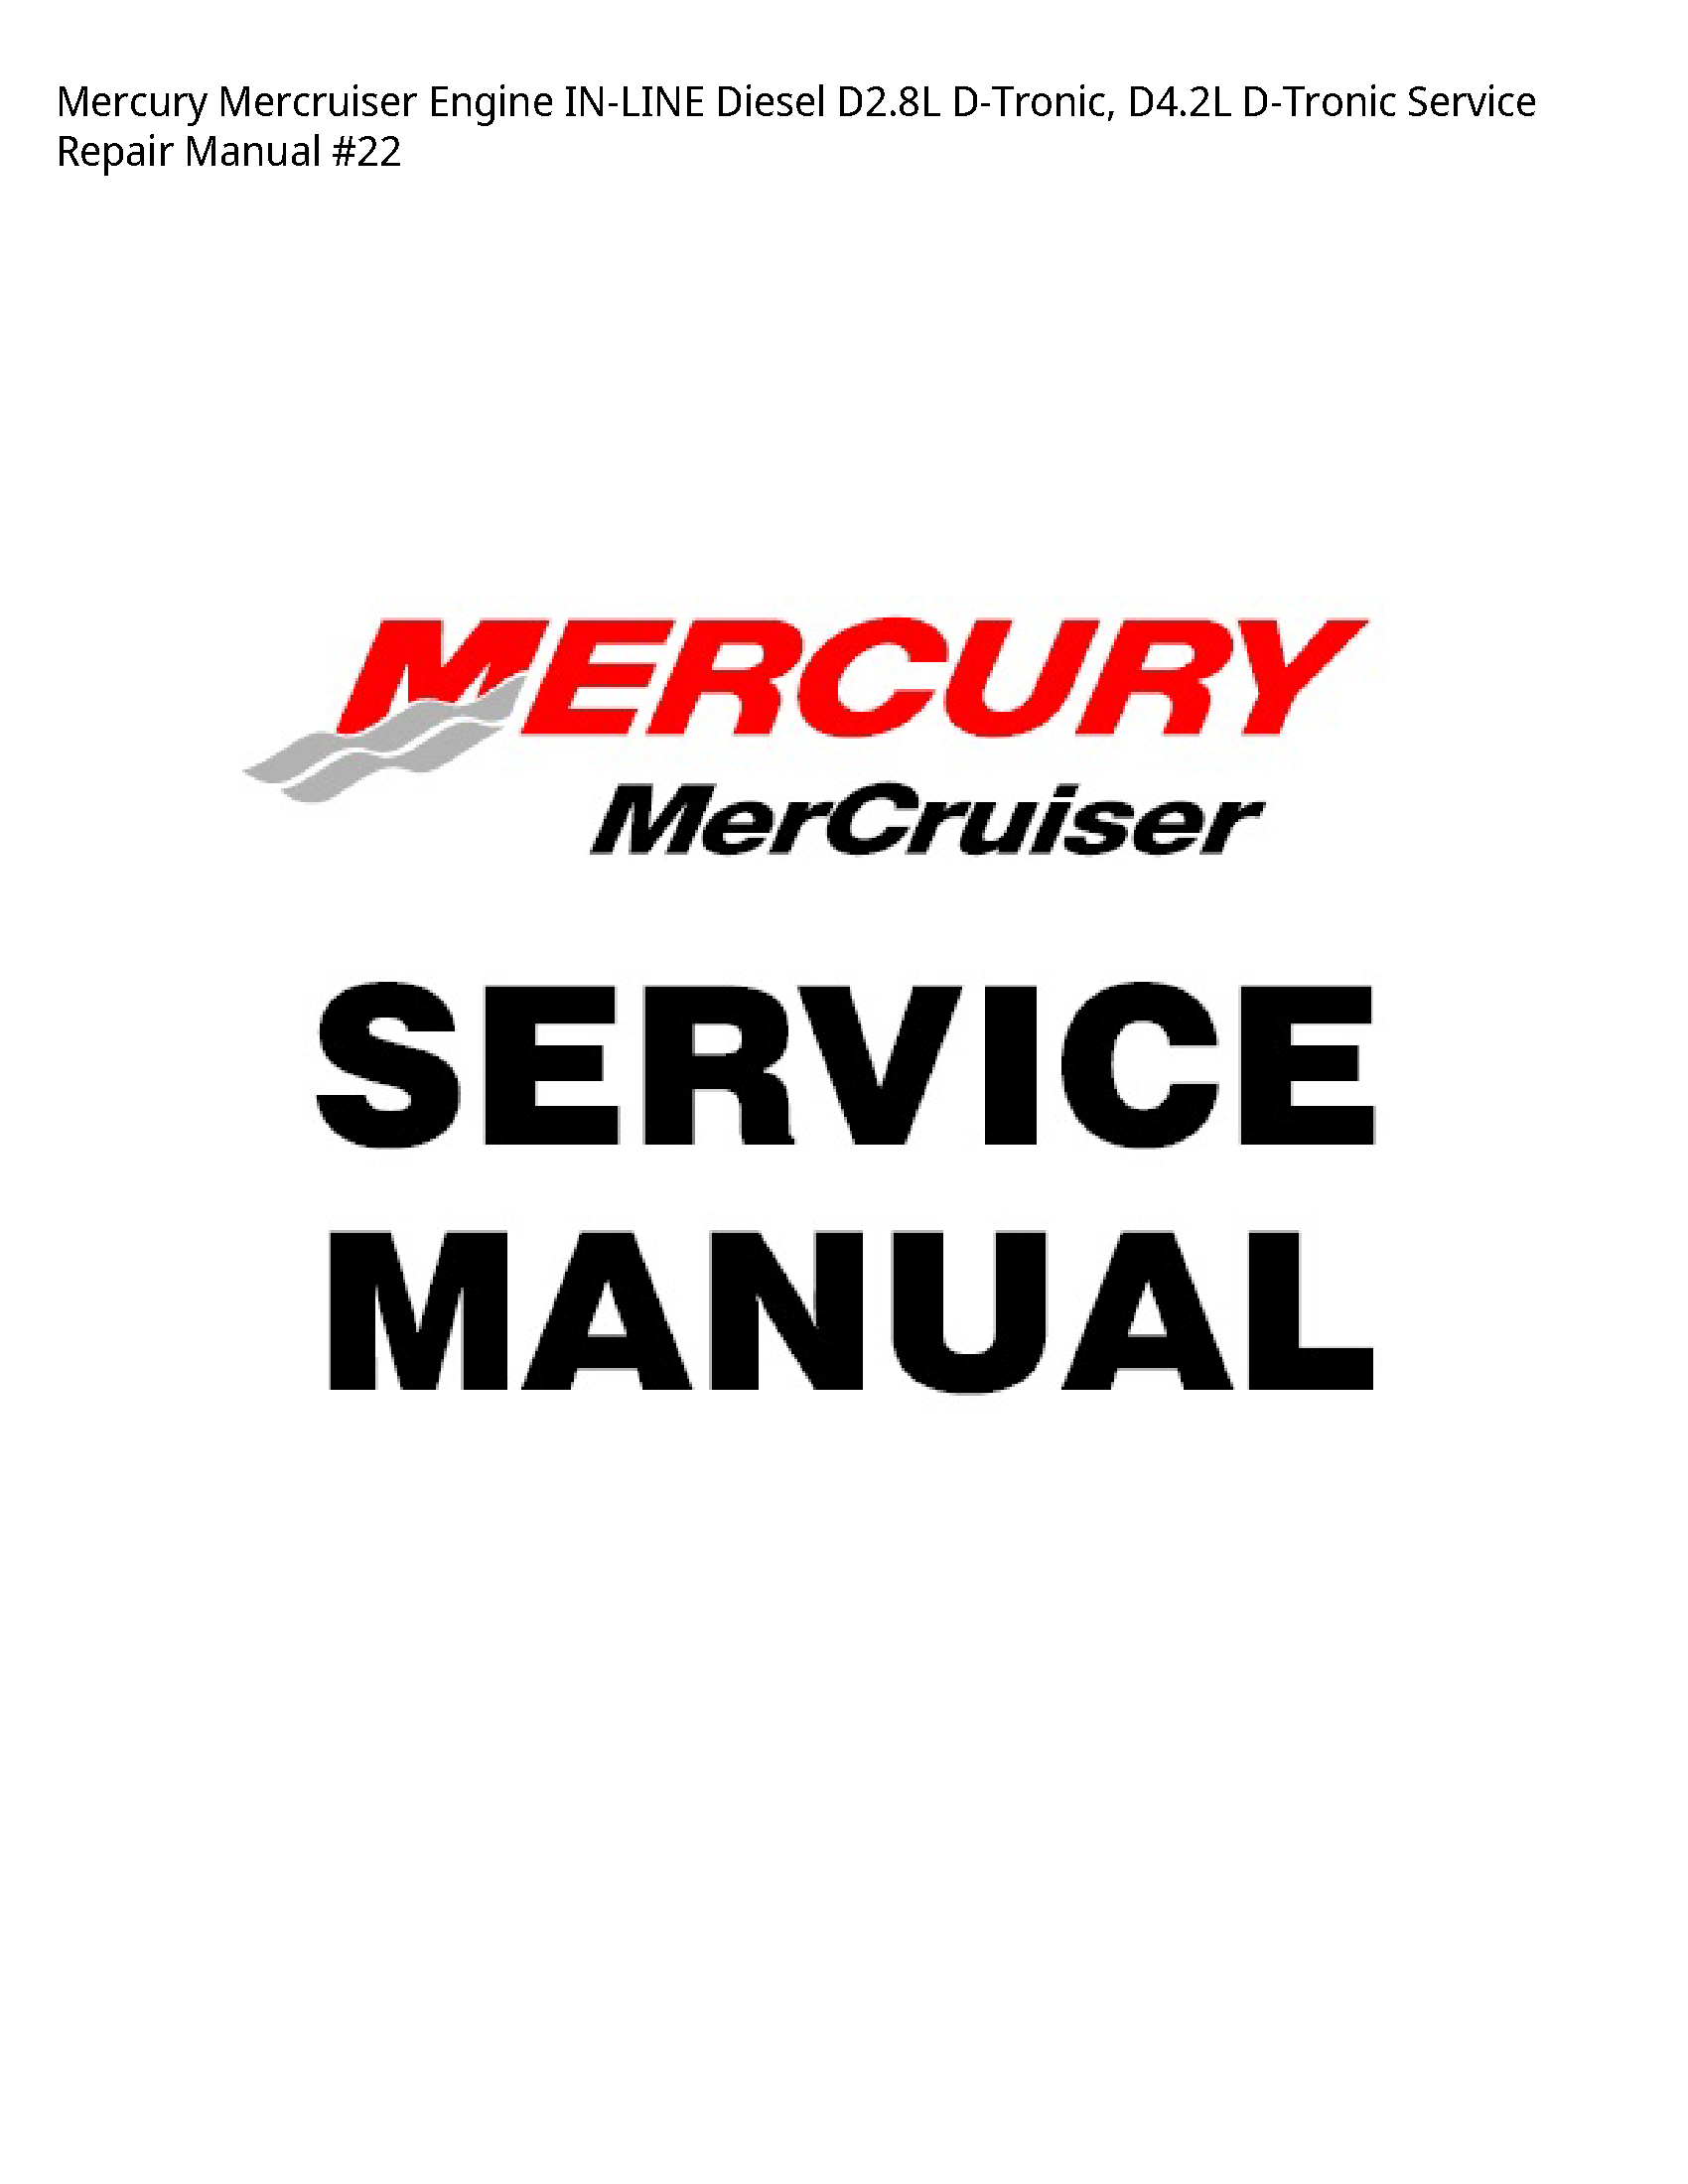 Mercury D2.8L Mercruiser Engine IN-LINE Diesel D-Tronic manual